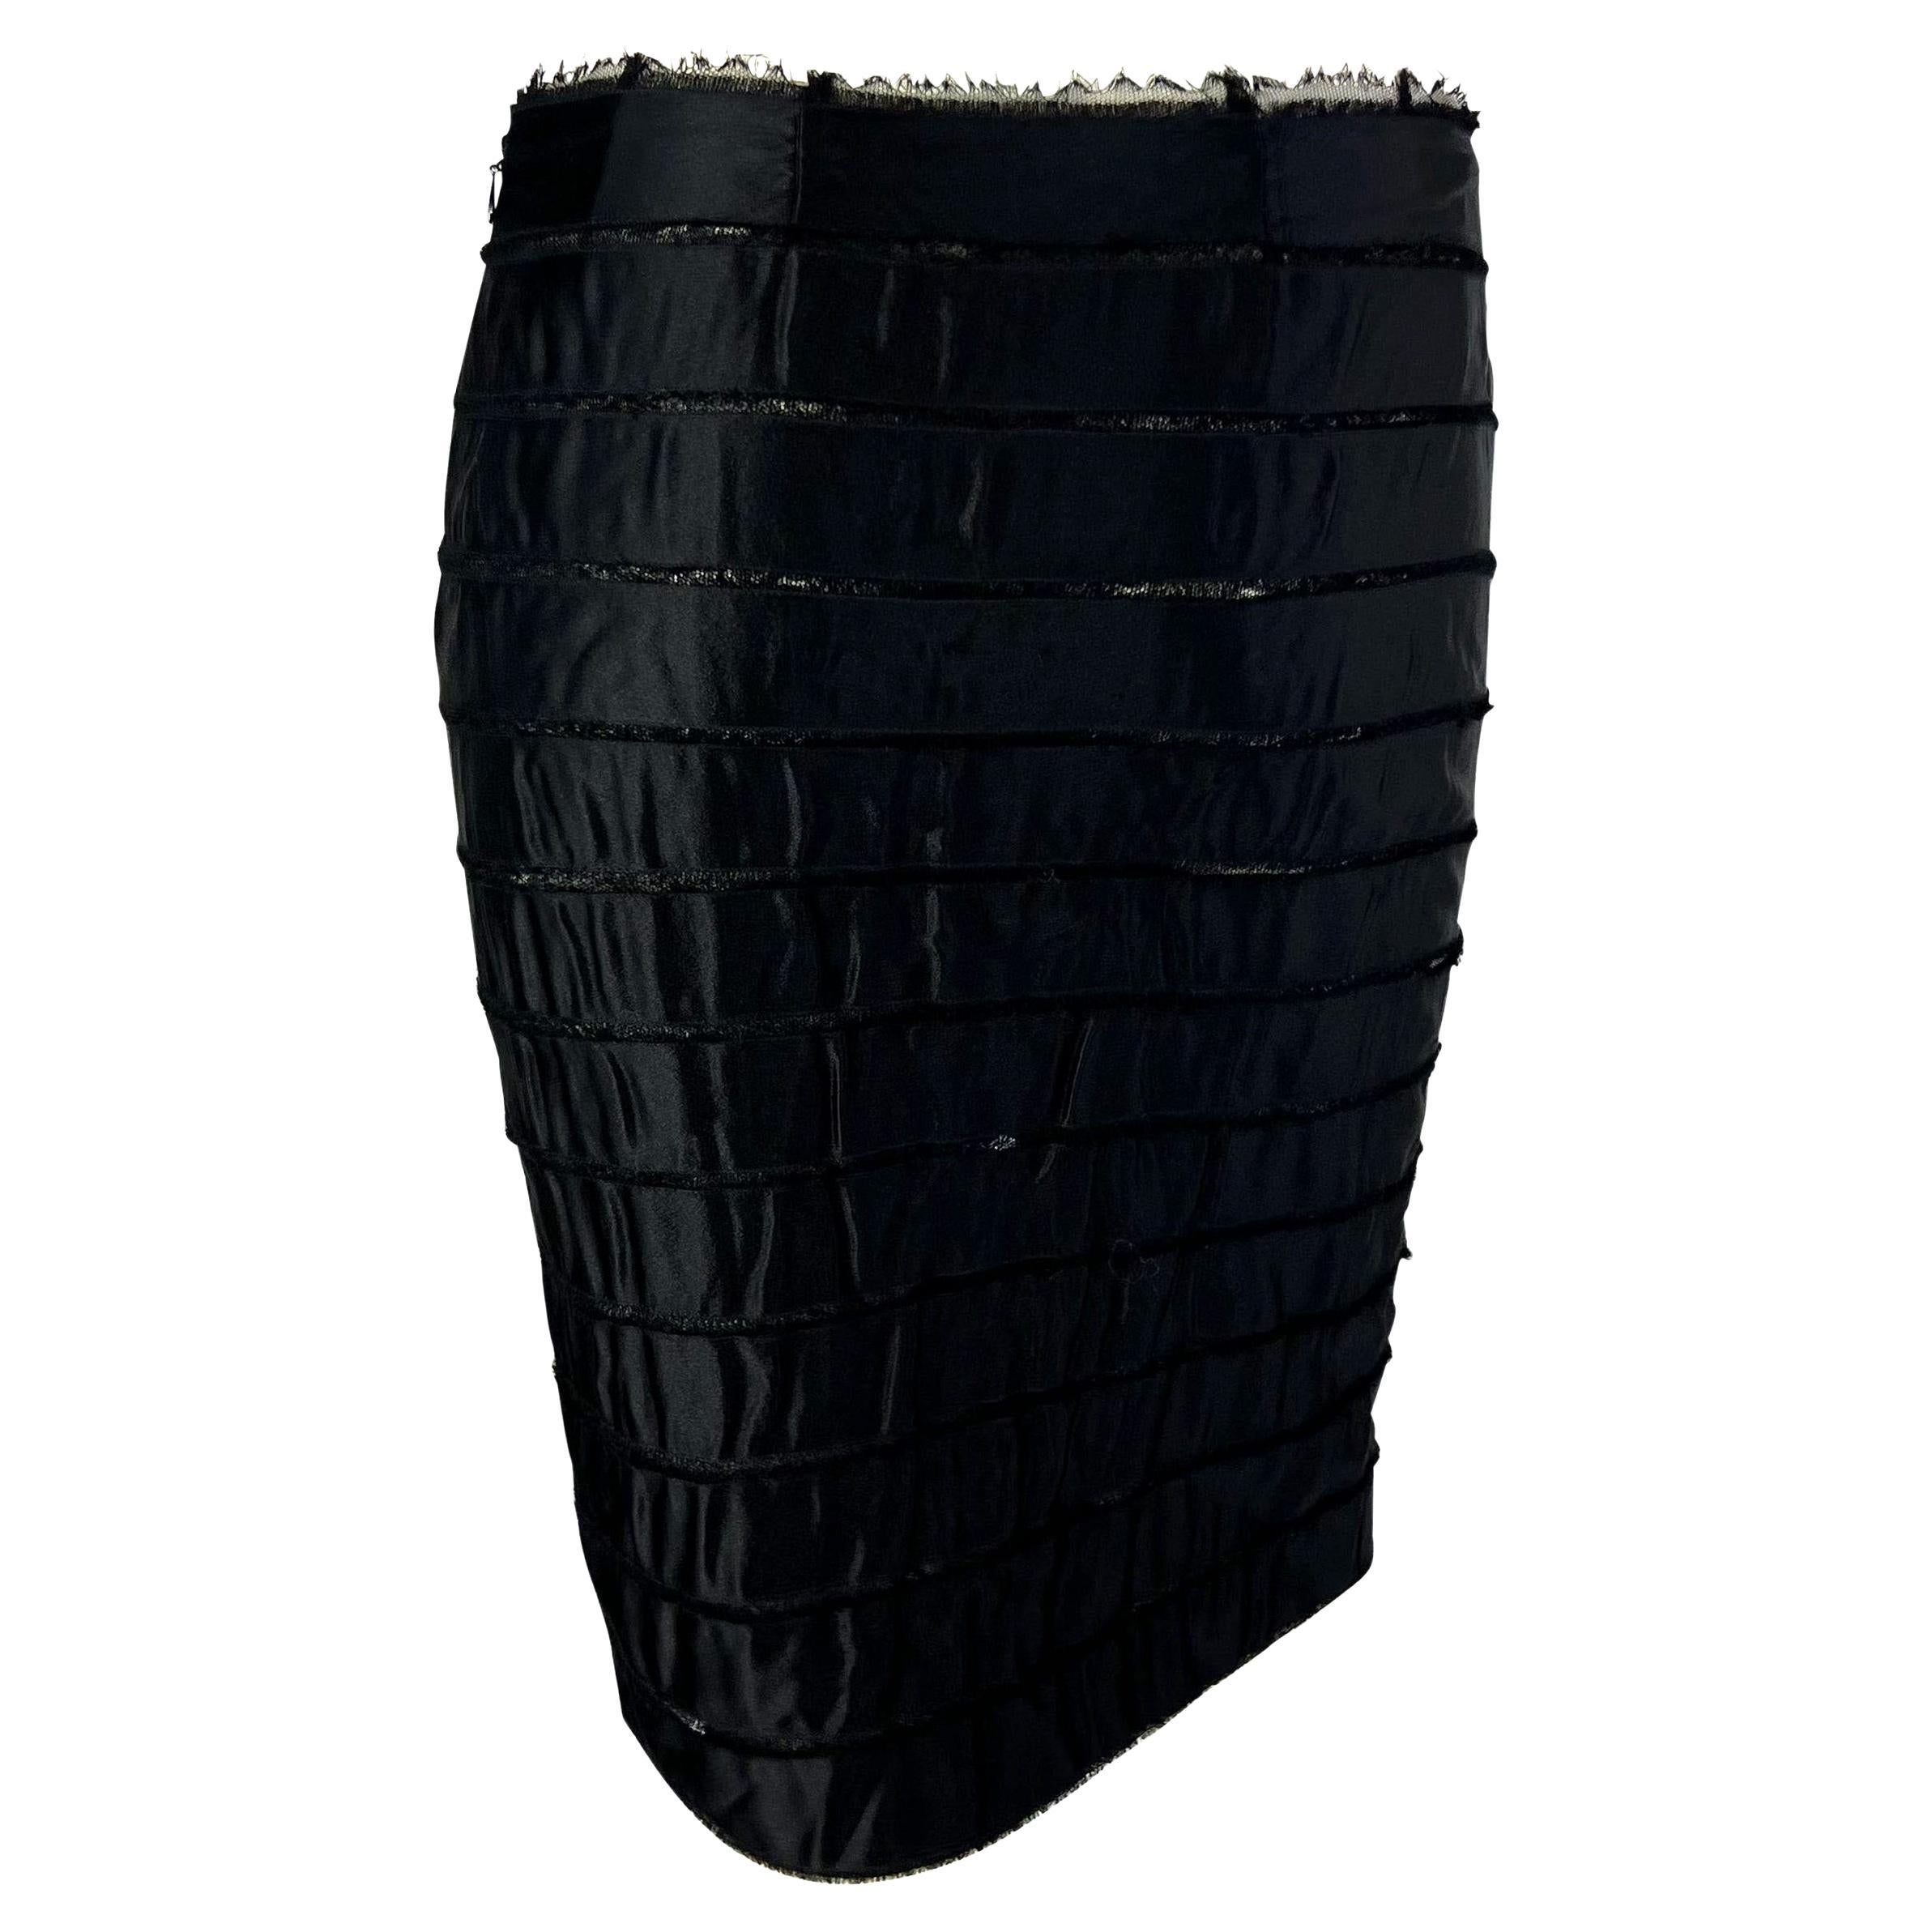 F/W 2002 Yves Saint Laurent by Tom Ford Runway Black Satin Ribbon Tulle Skirt For Sale 2